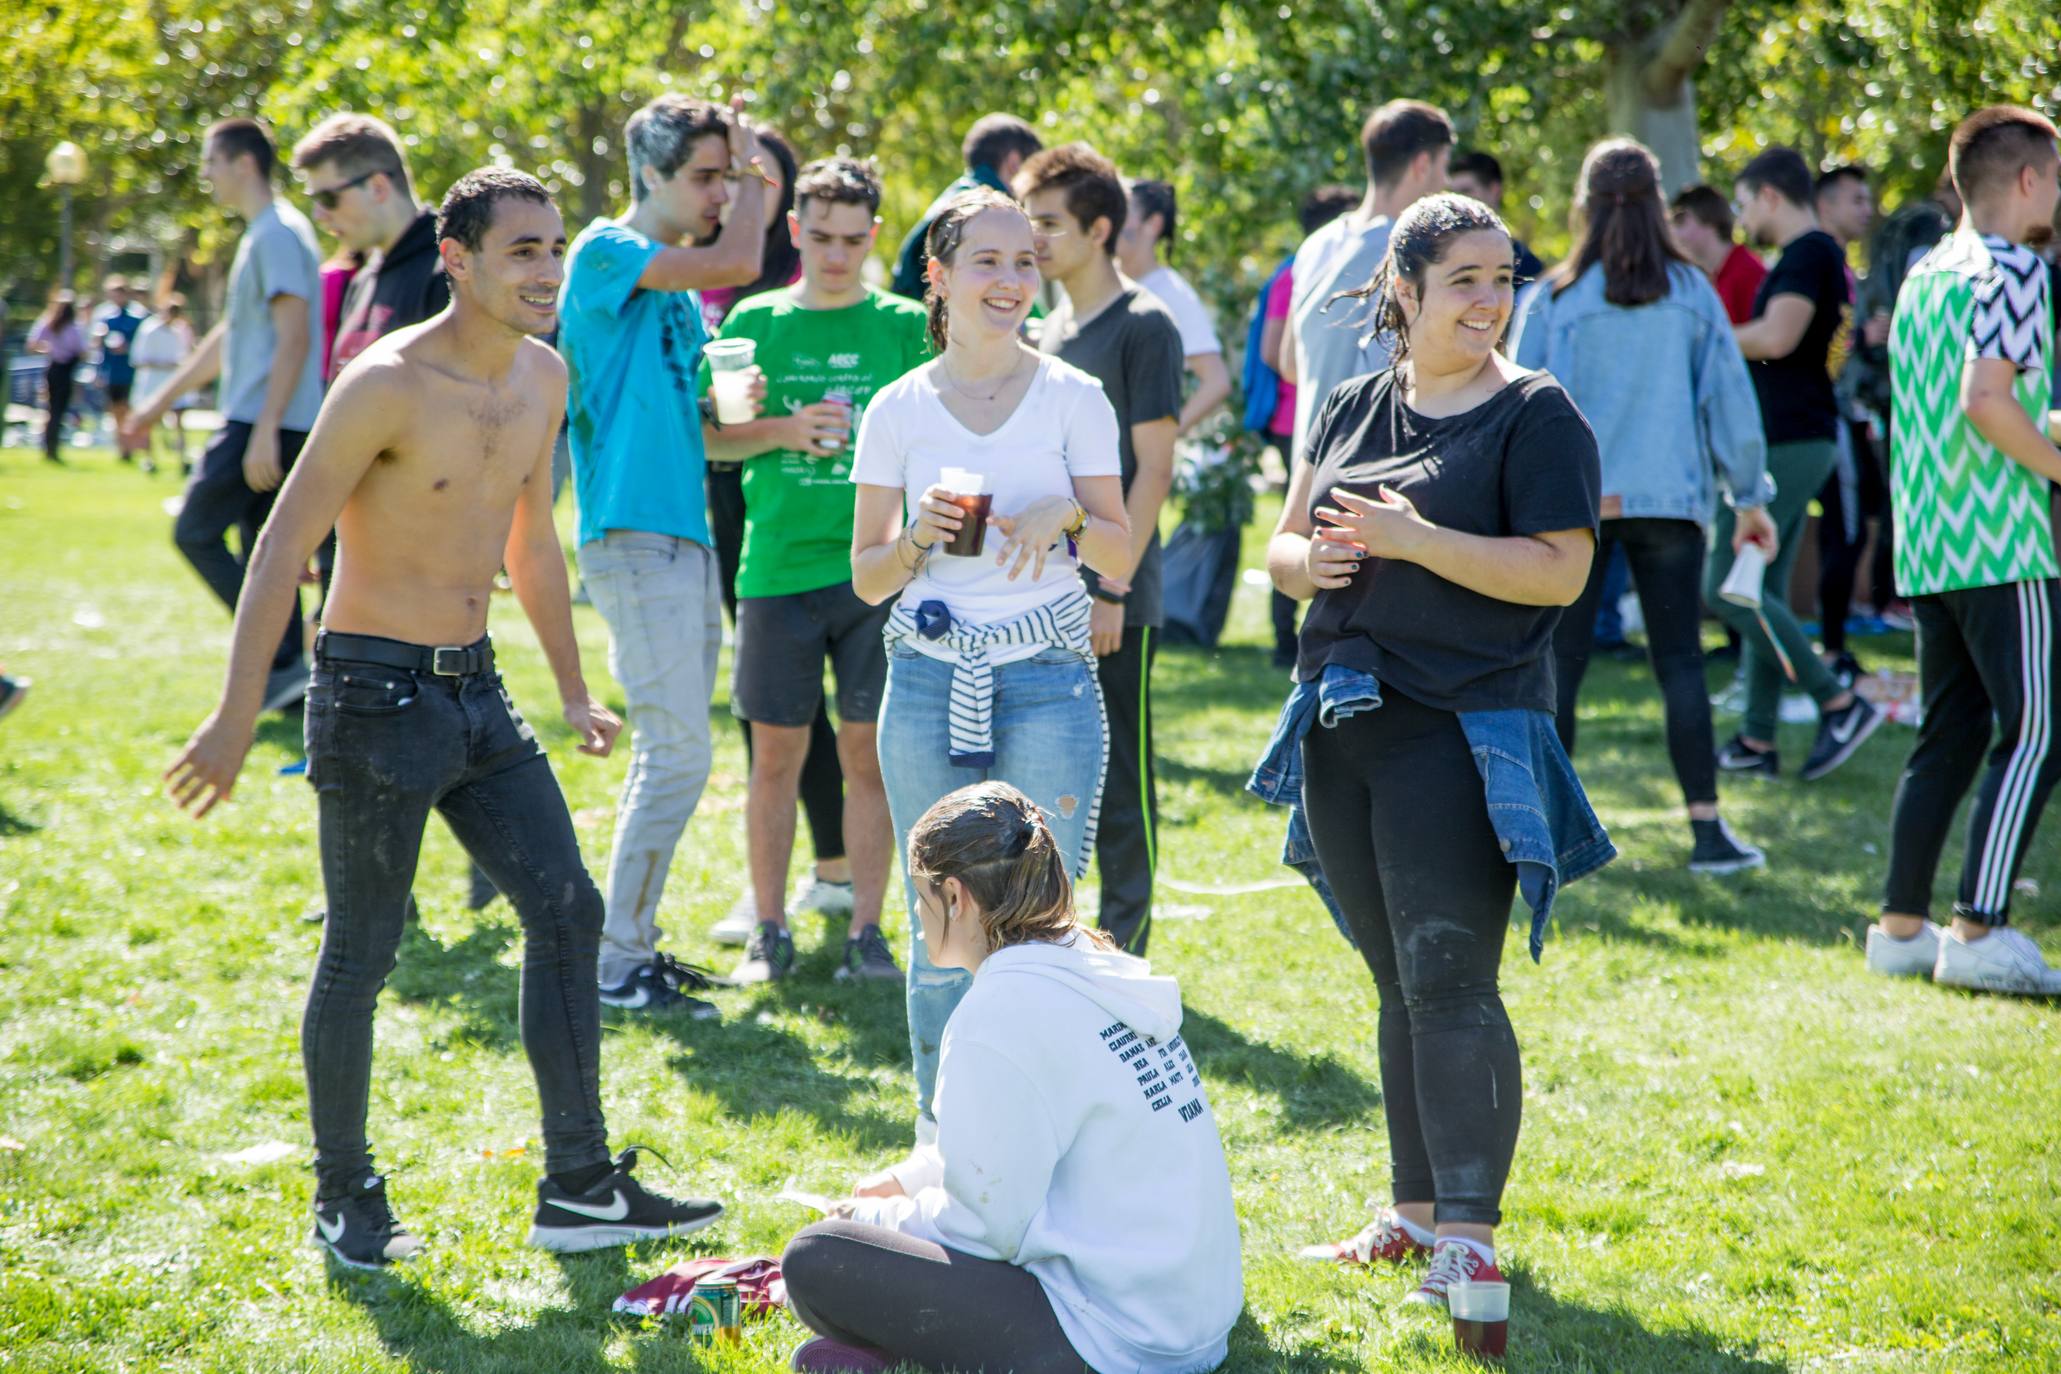 Los estudiantes de la Universidad de La Rioja celebran las novatadas